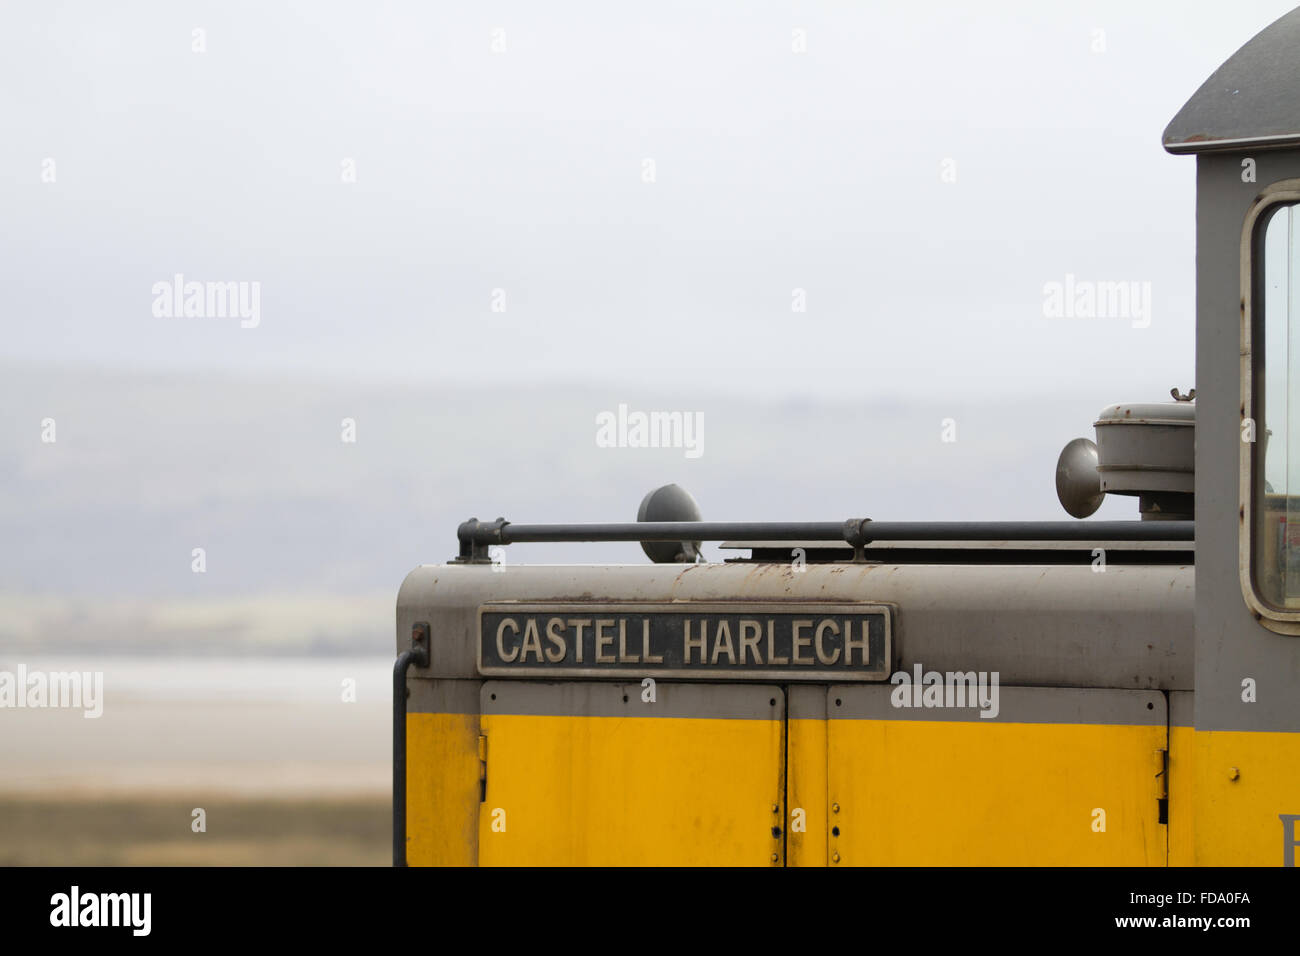 Obras loco diesel Castell está en Harlech Porthmadog Harbour Station en el Ffestiniog Railway Foto de stock